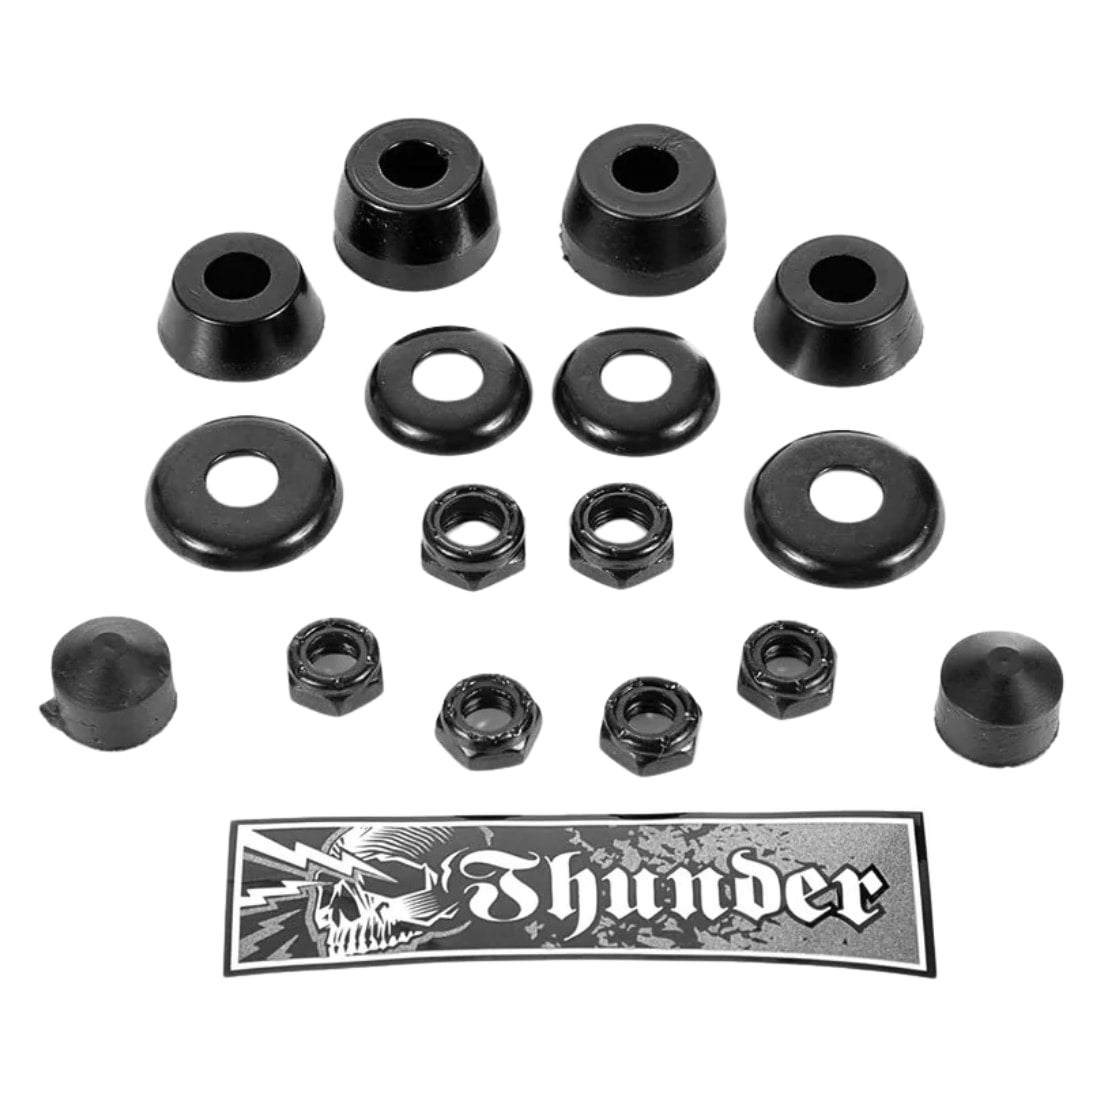 Thunder 100 Duro Rebuild Kit (Bushings/Nuts/Pivot Cup/Washers) - Black - Skateboard Bushings by Thunder